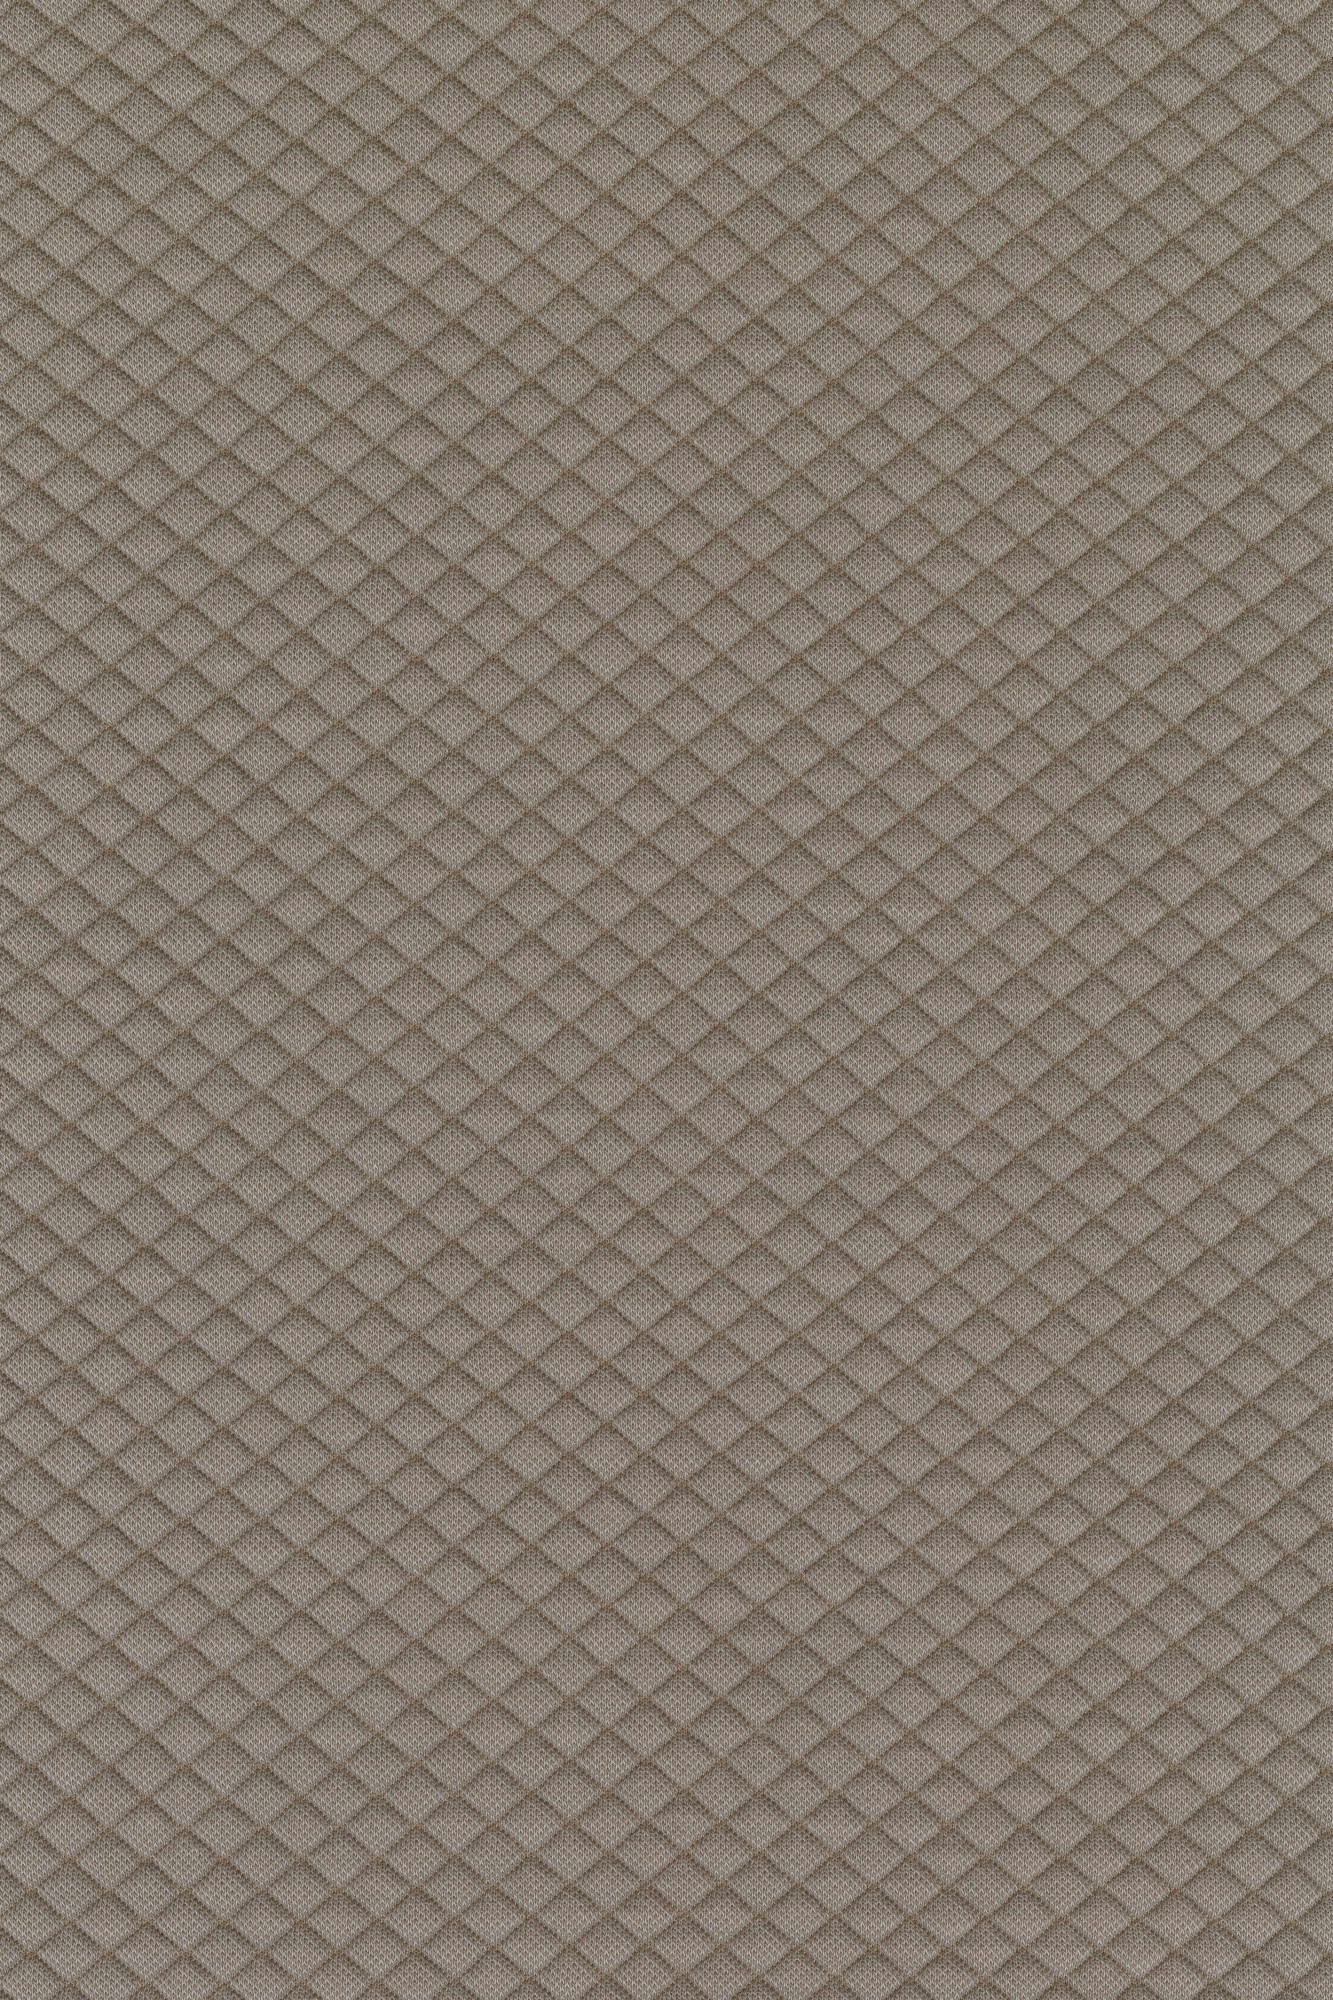 Fabric sample Mosaic 2 0222 brown